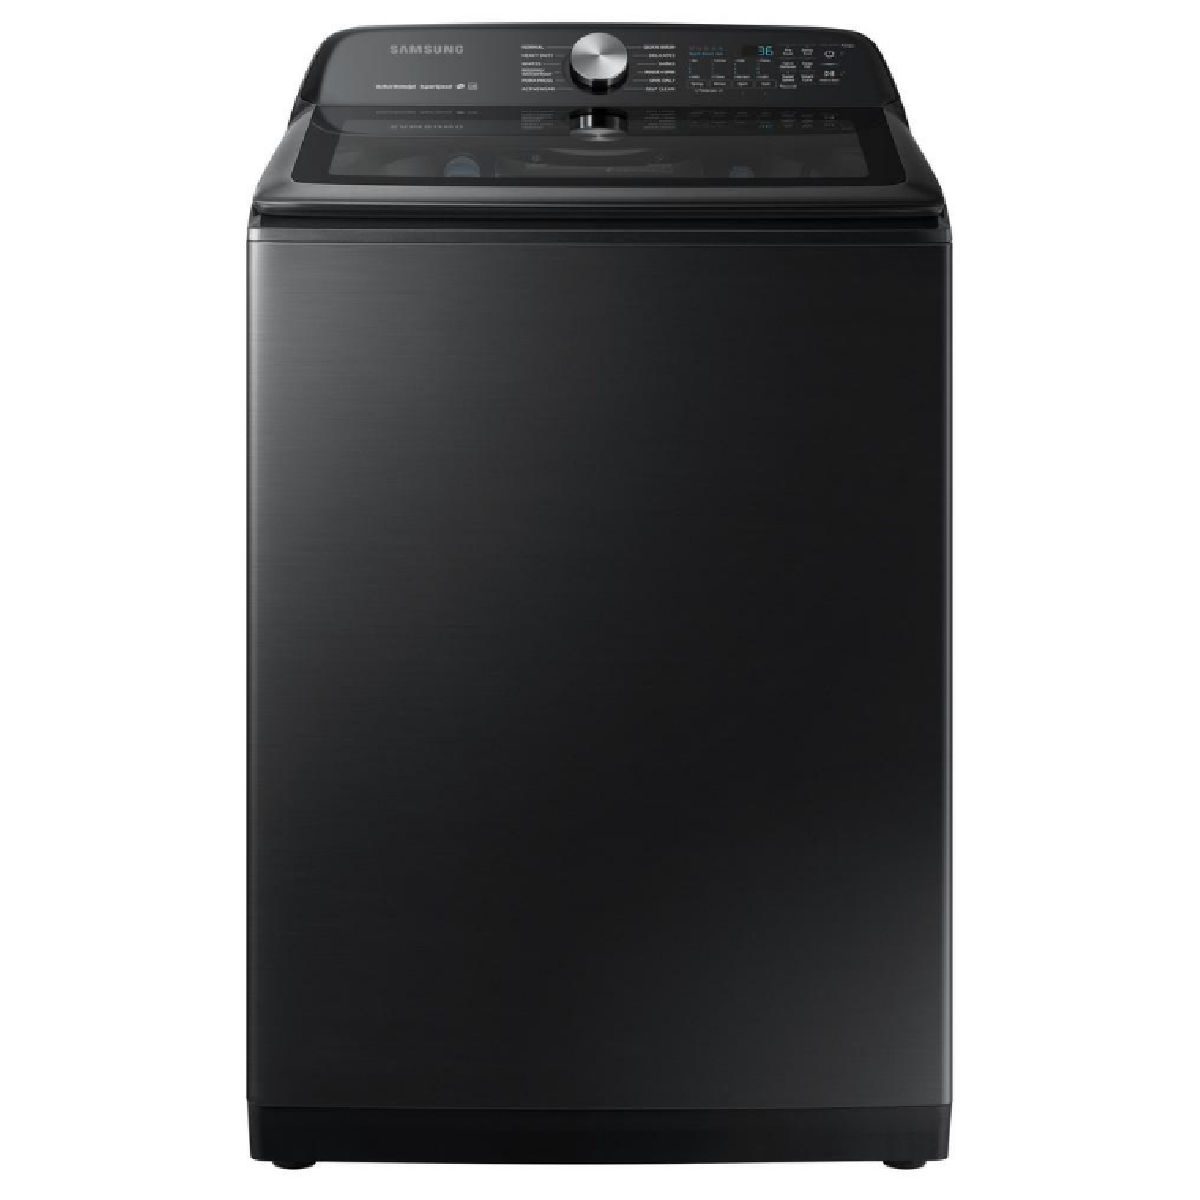 Samsung WA50R5400AV 5.0 cu. ft. Hi-Efficiency Fingerprint Resistant Black Stainless Top Load Washing Machine